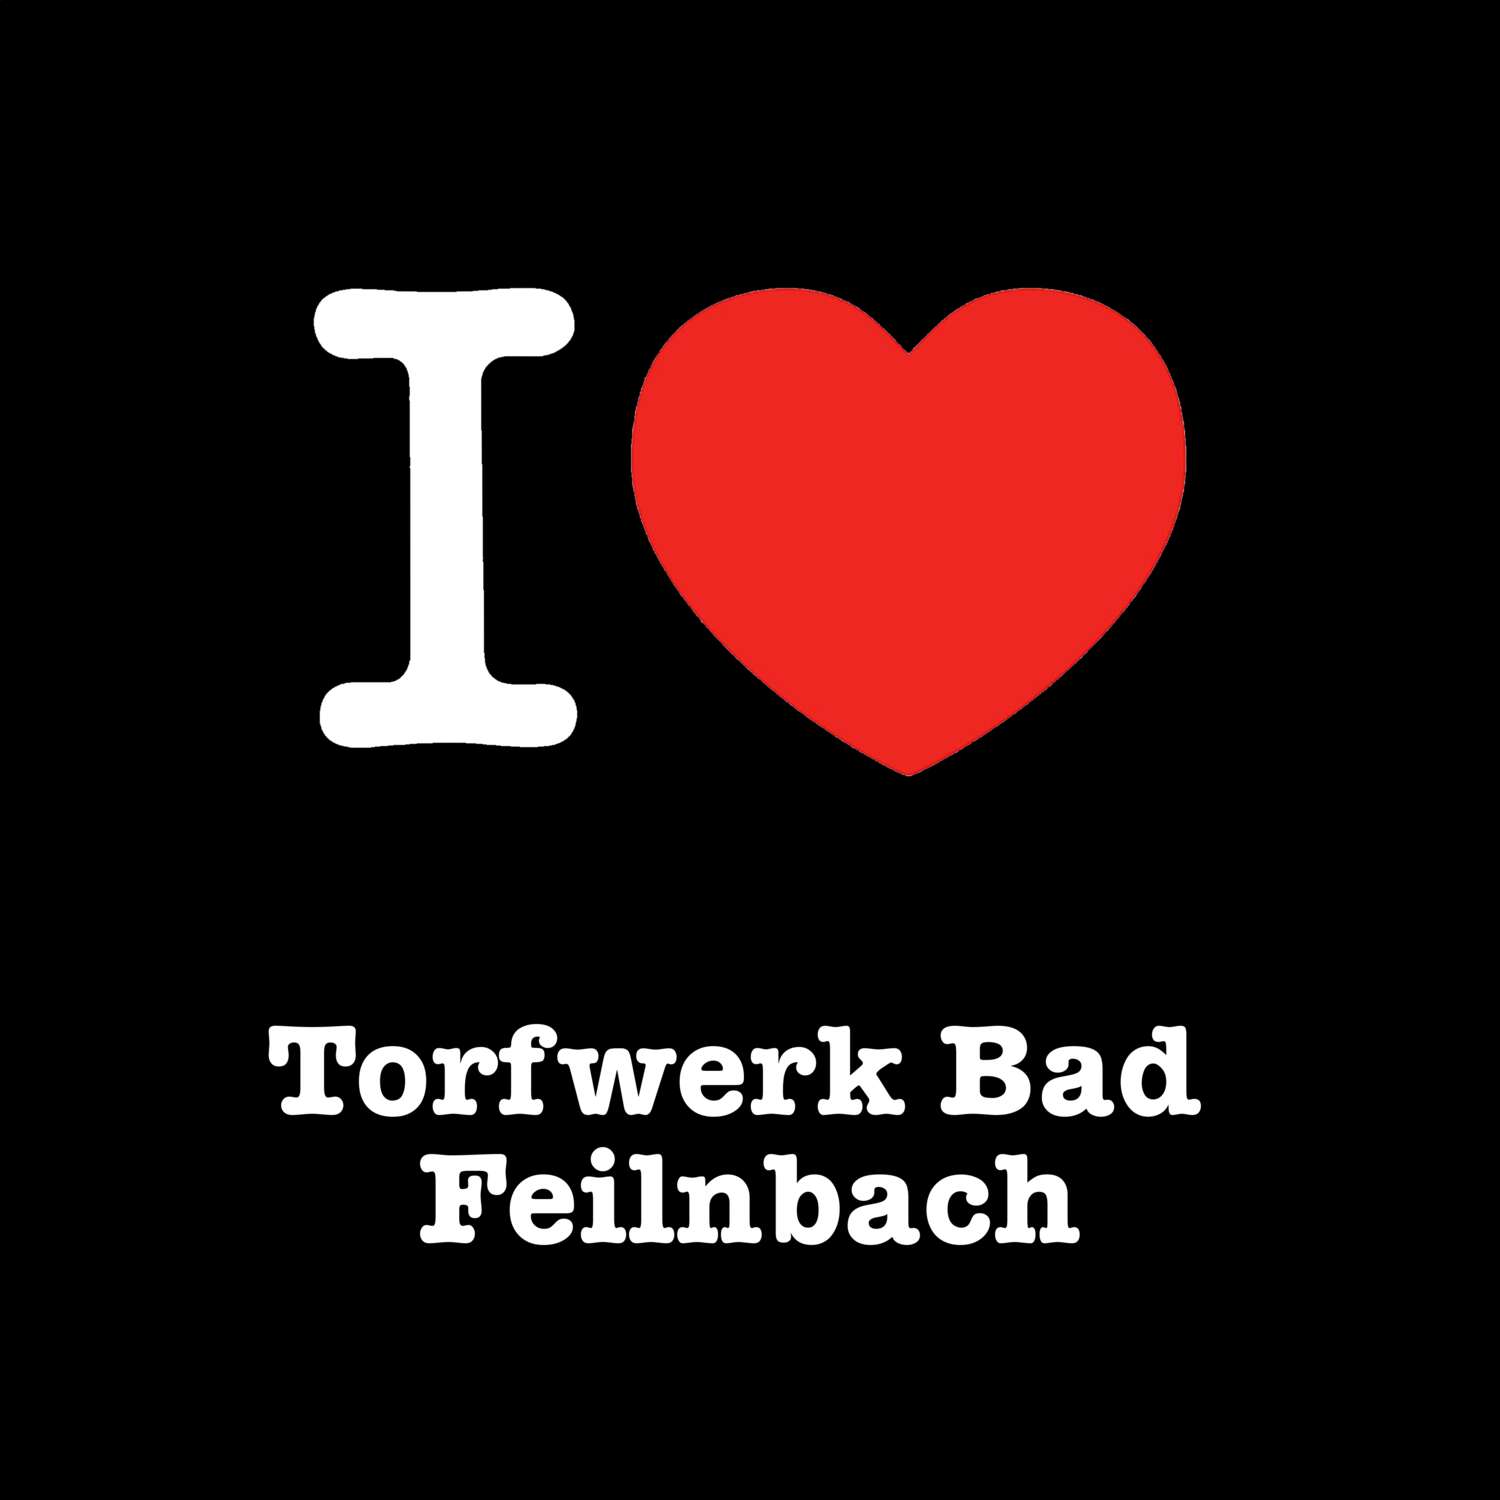 Torfwerk Bad Feilnbach T-Shirt »I love«